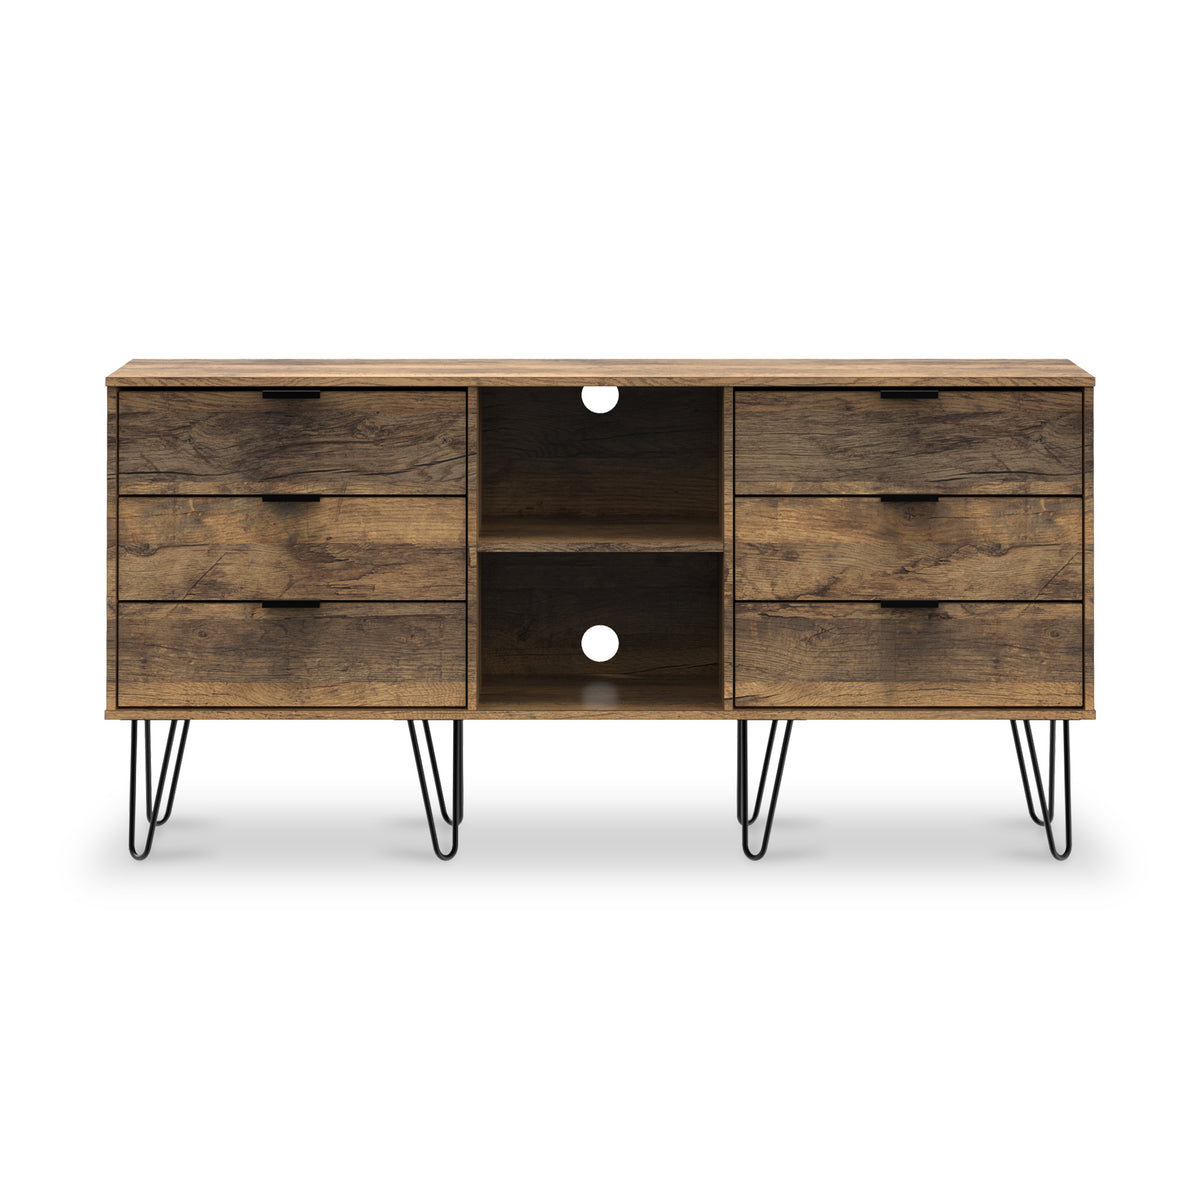 Moreno Rustic Oak with Black Hairpin Legs 6 Drawer Sideboard from Roseland Furniture